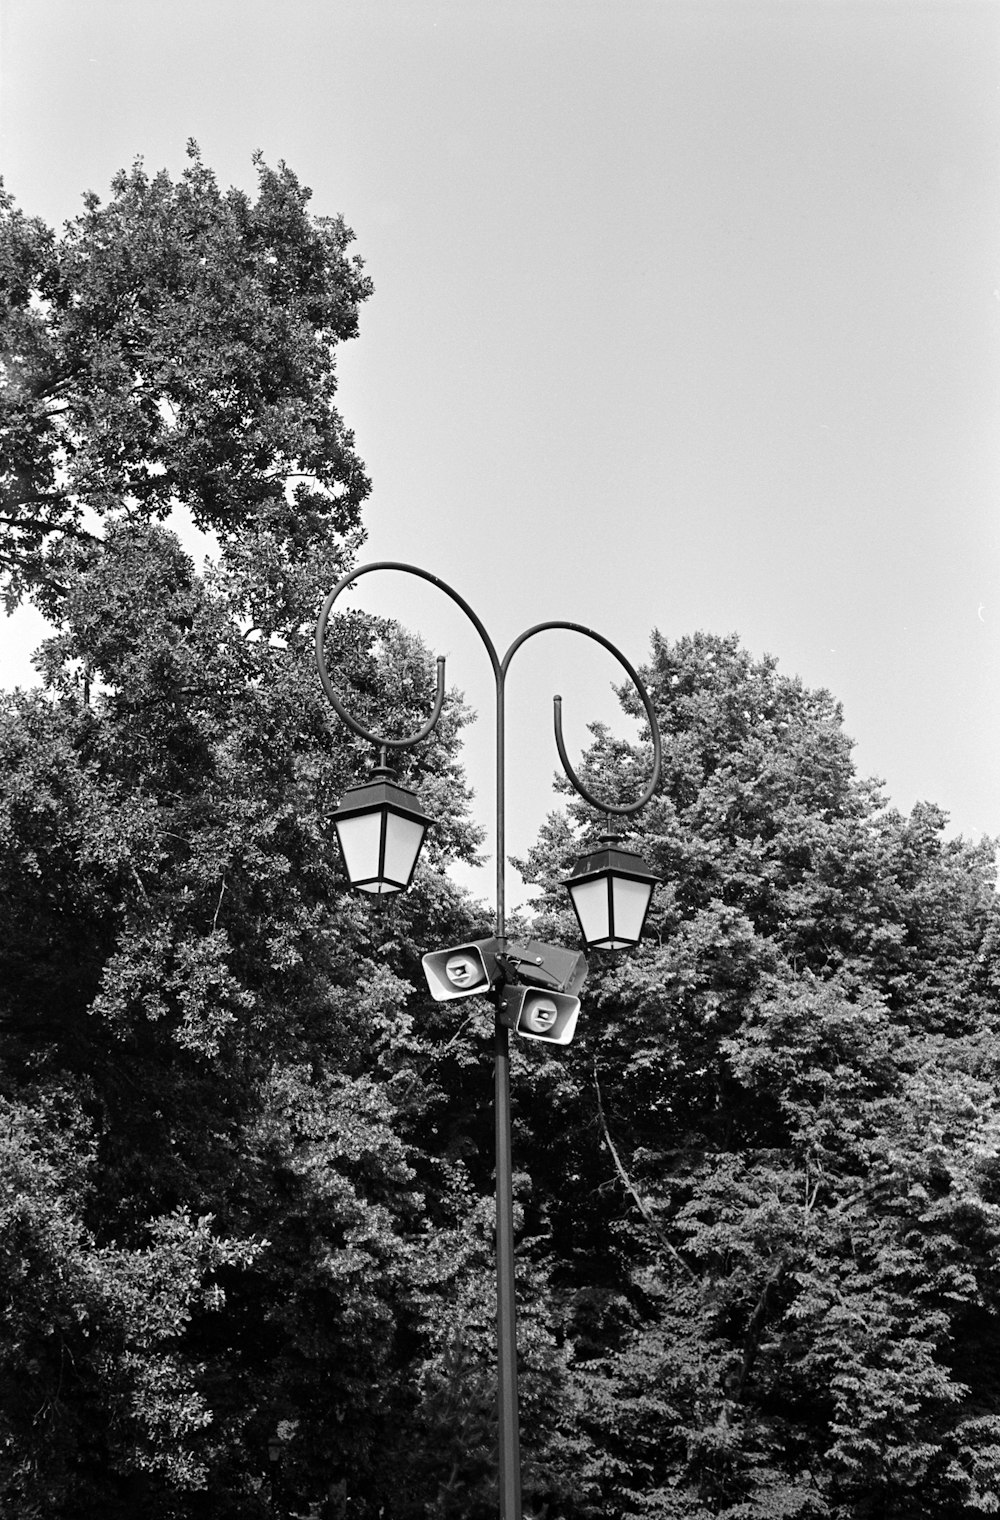 grayscale photo of street light